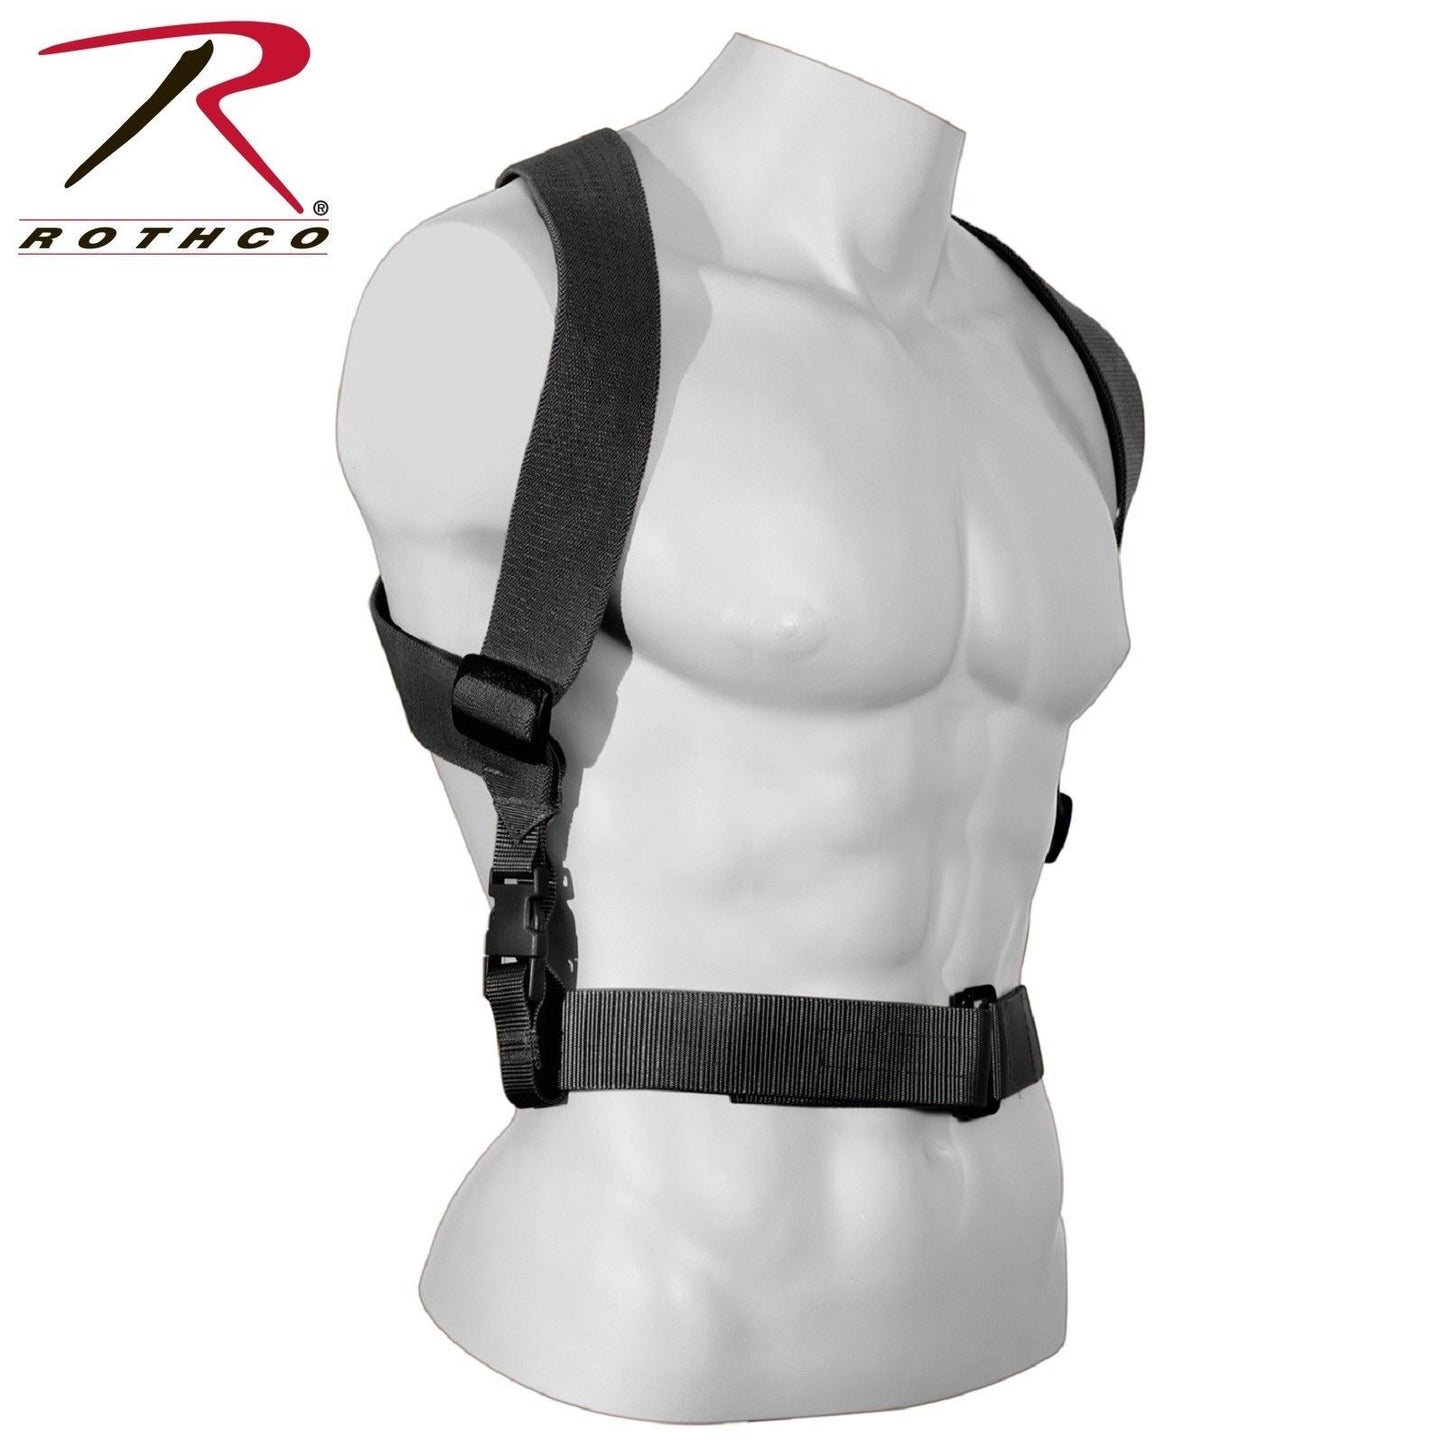 Rothco Black Combat Suspenders - 2" Wide Adjustable X-Back Suspenders